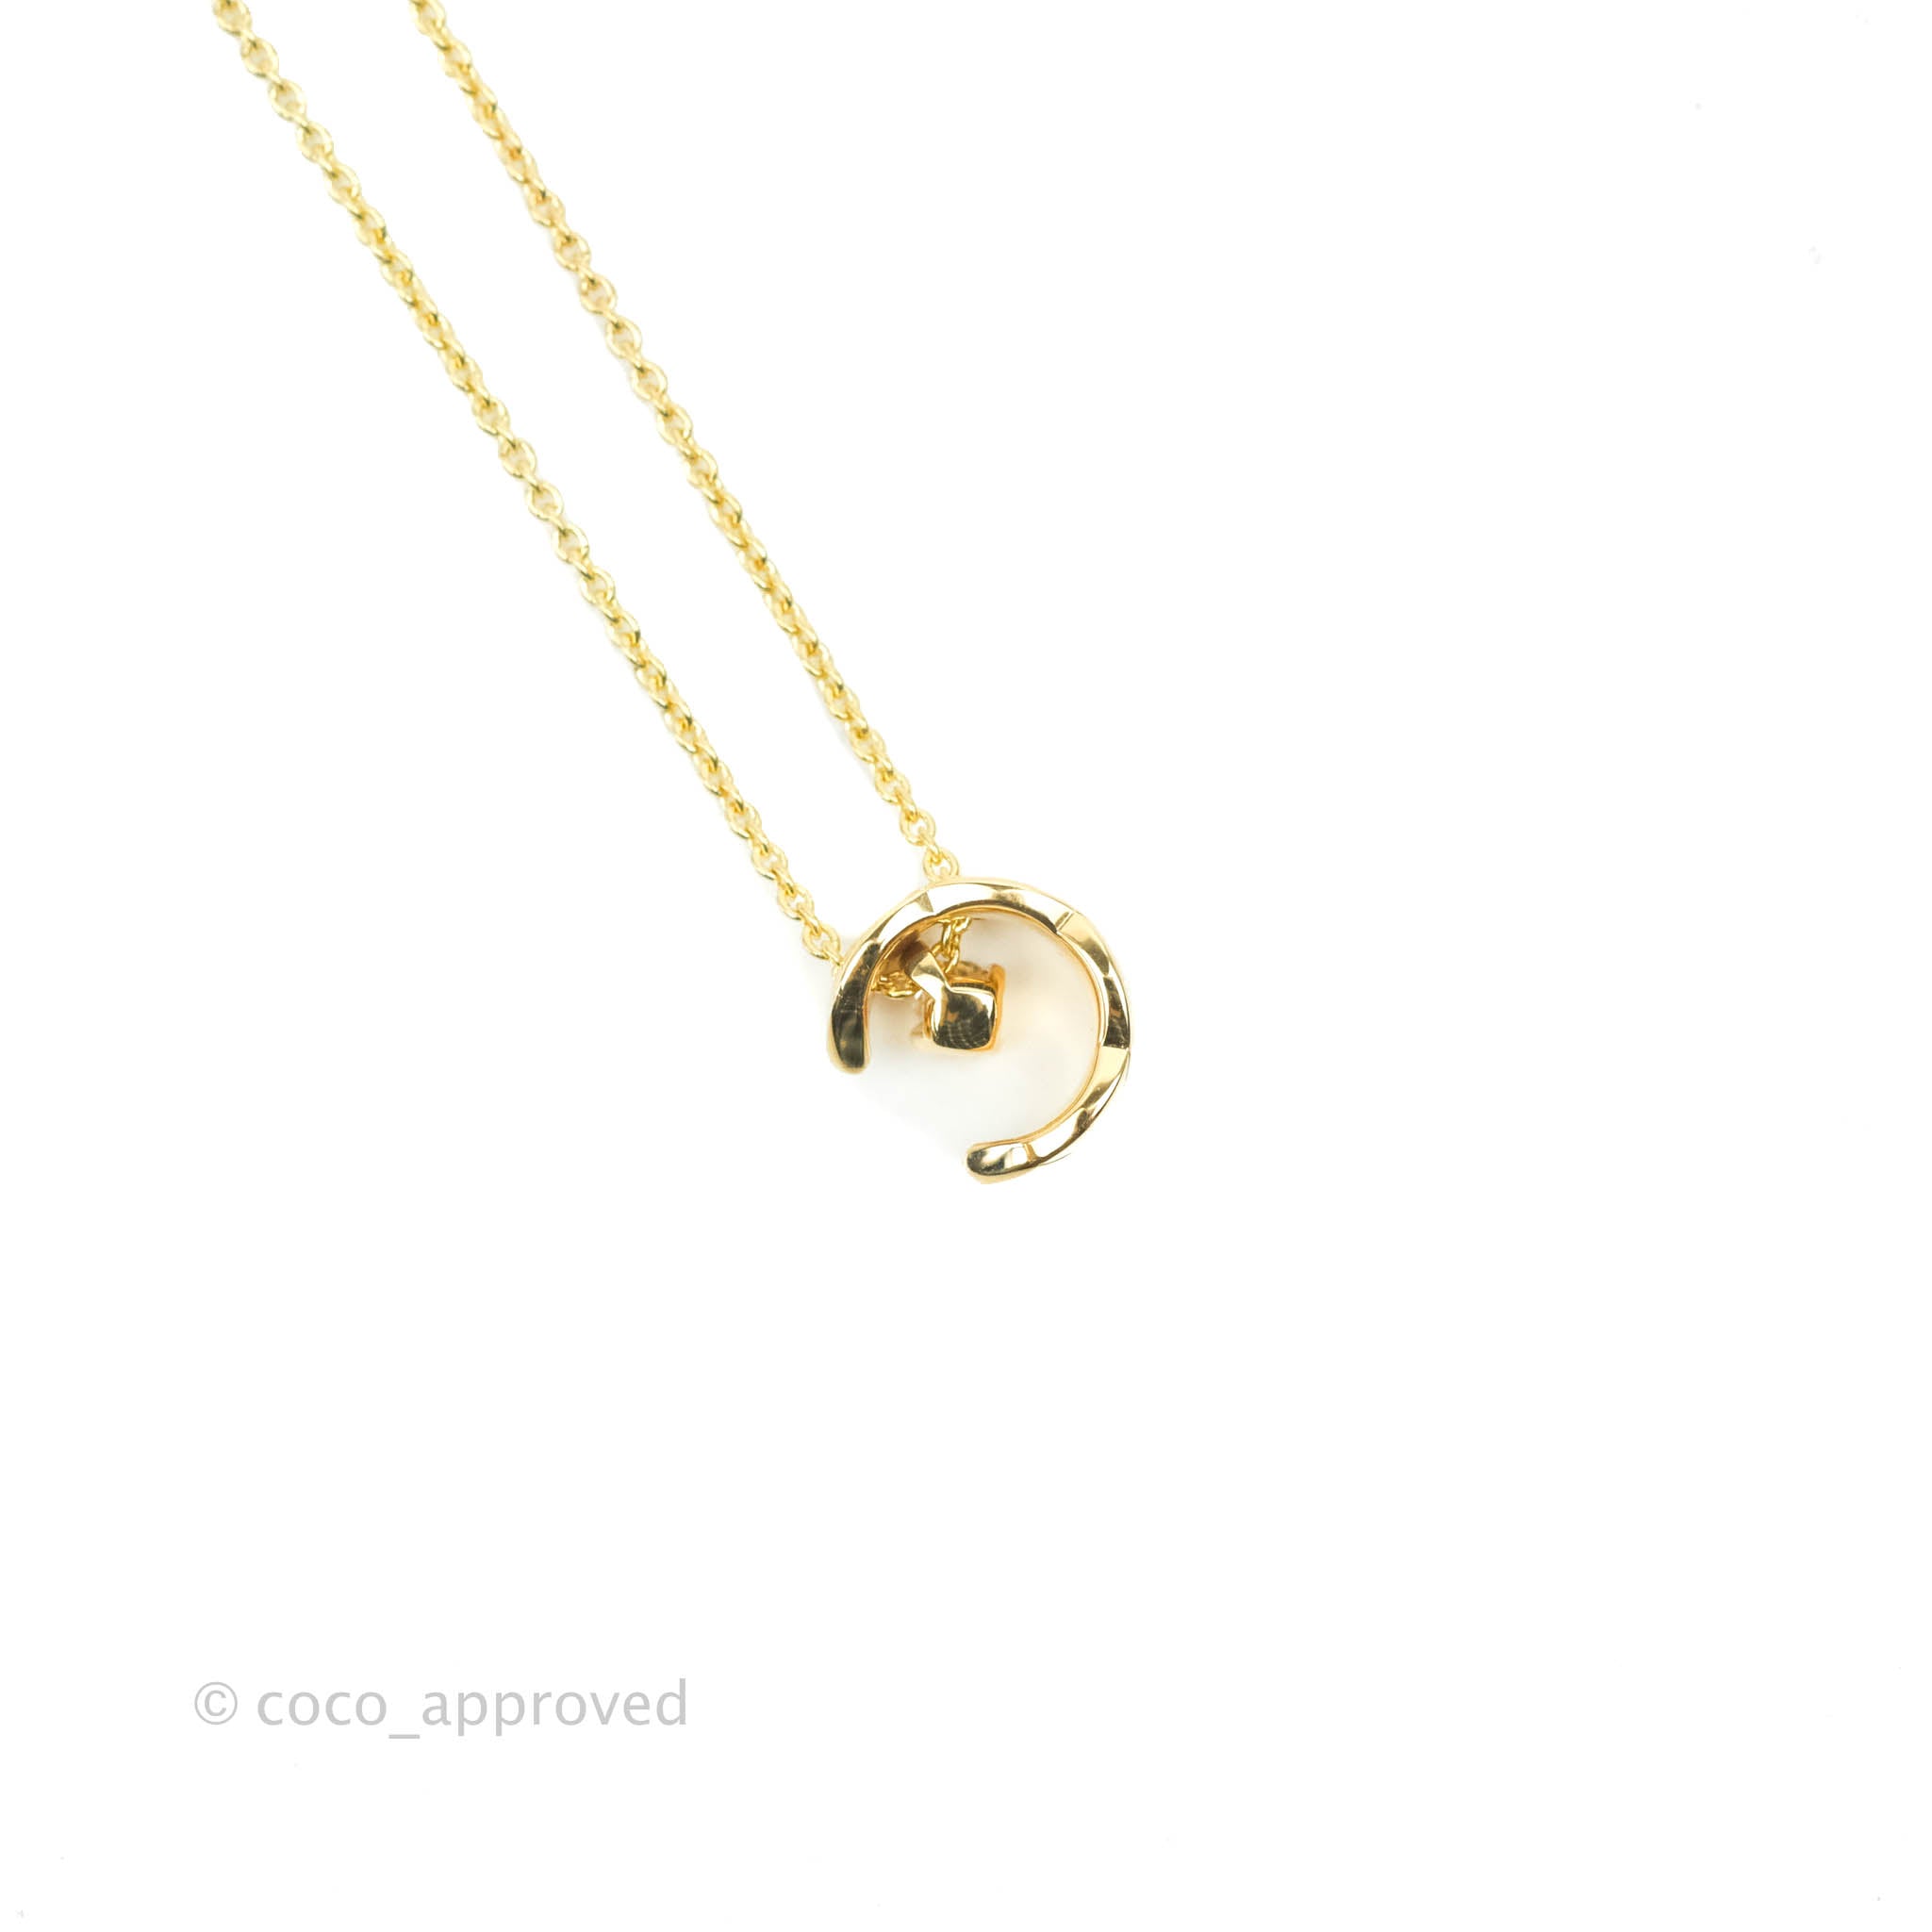 Chanel necklace gold white - Gem